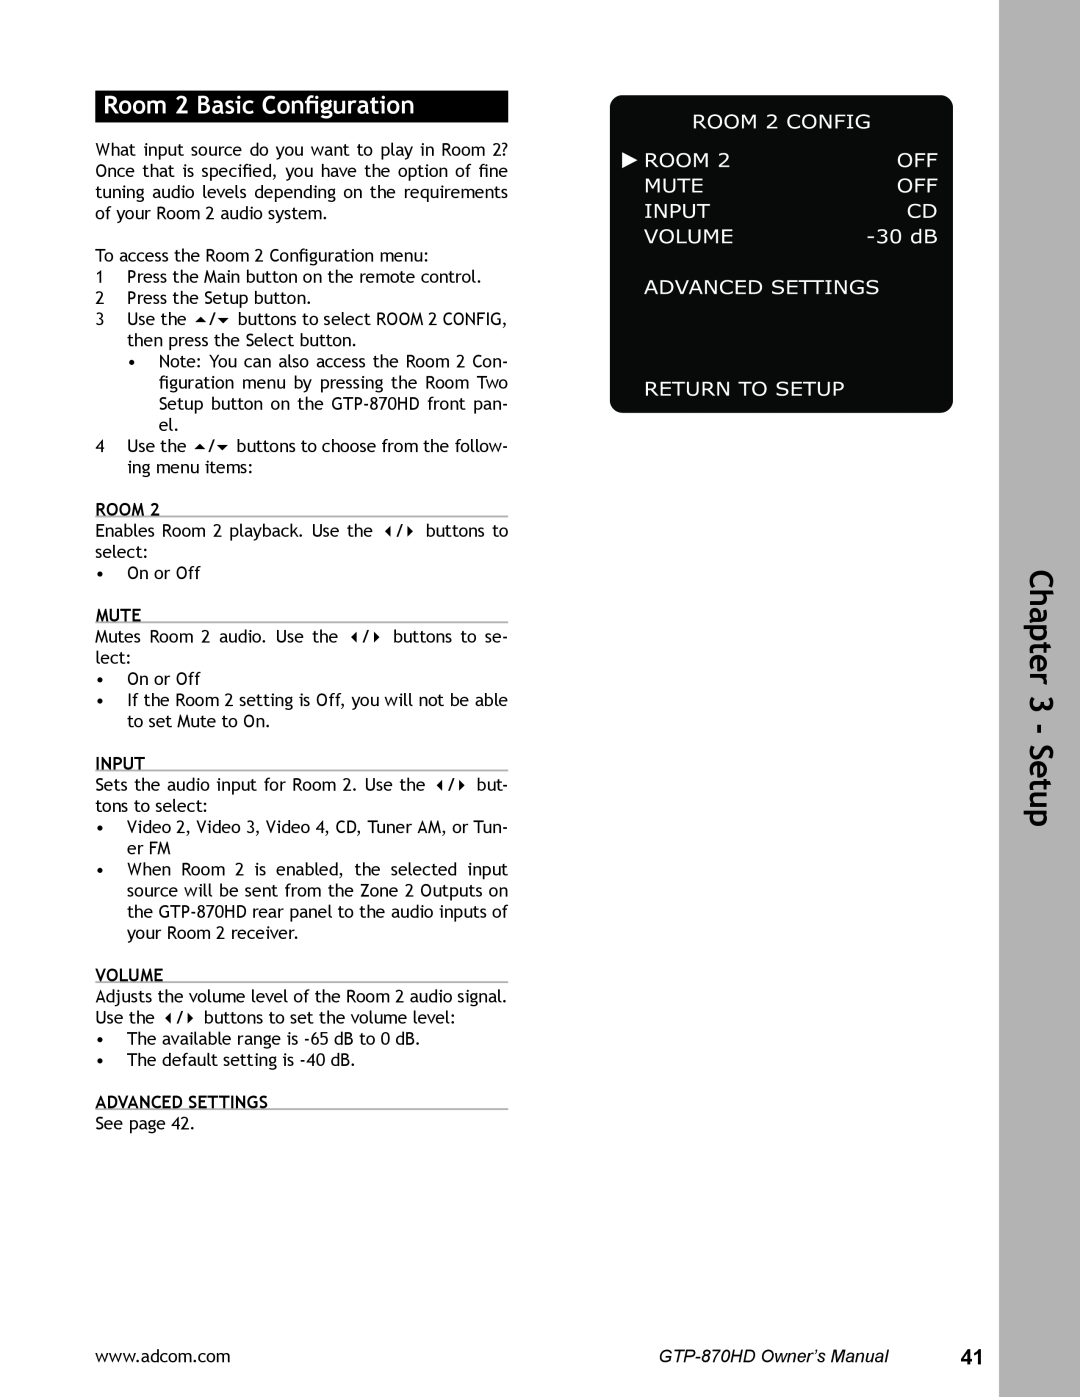 Adcom user manual Room 2 Basic Conﬁguration, Mute, Advanced Settings, Setup, Input, Volume, GTP-870HDOwner’s Manual 